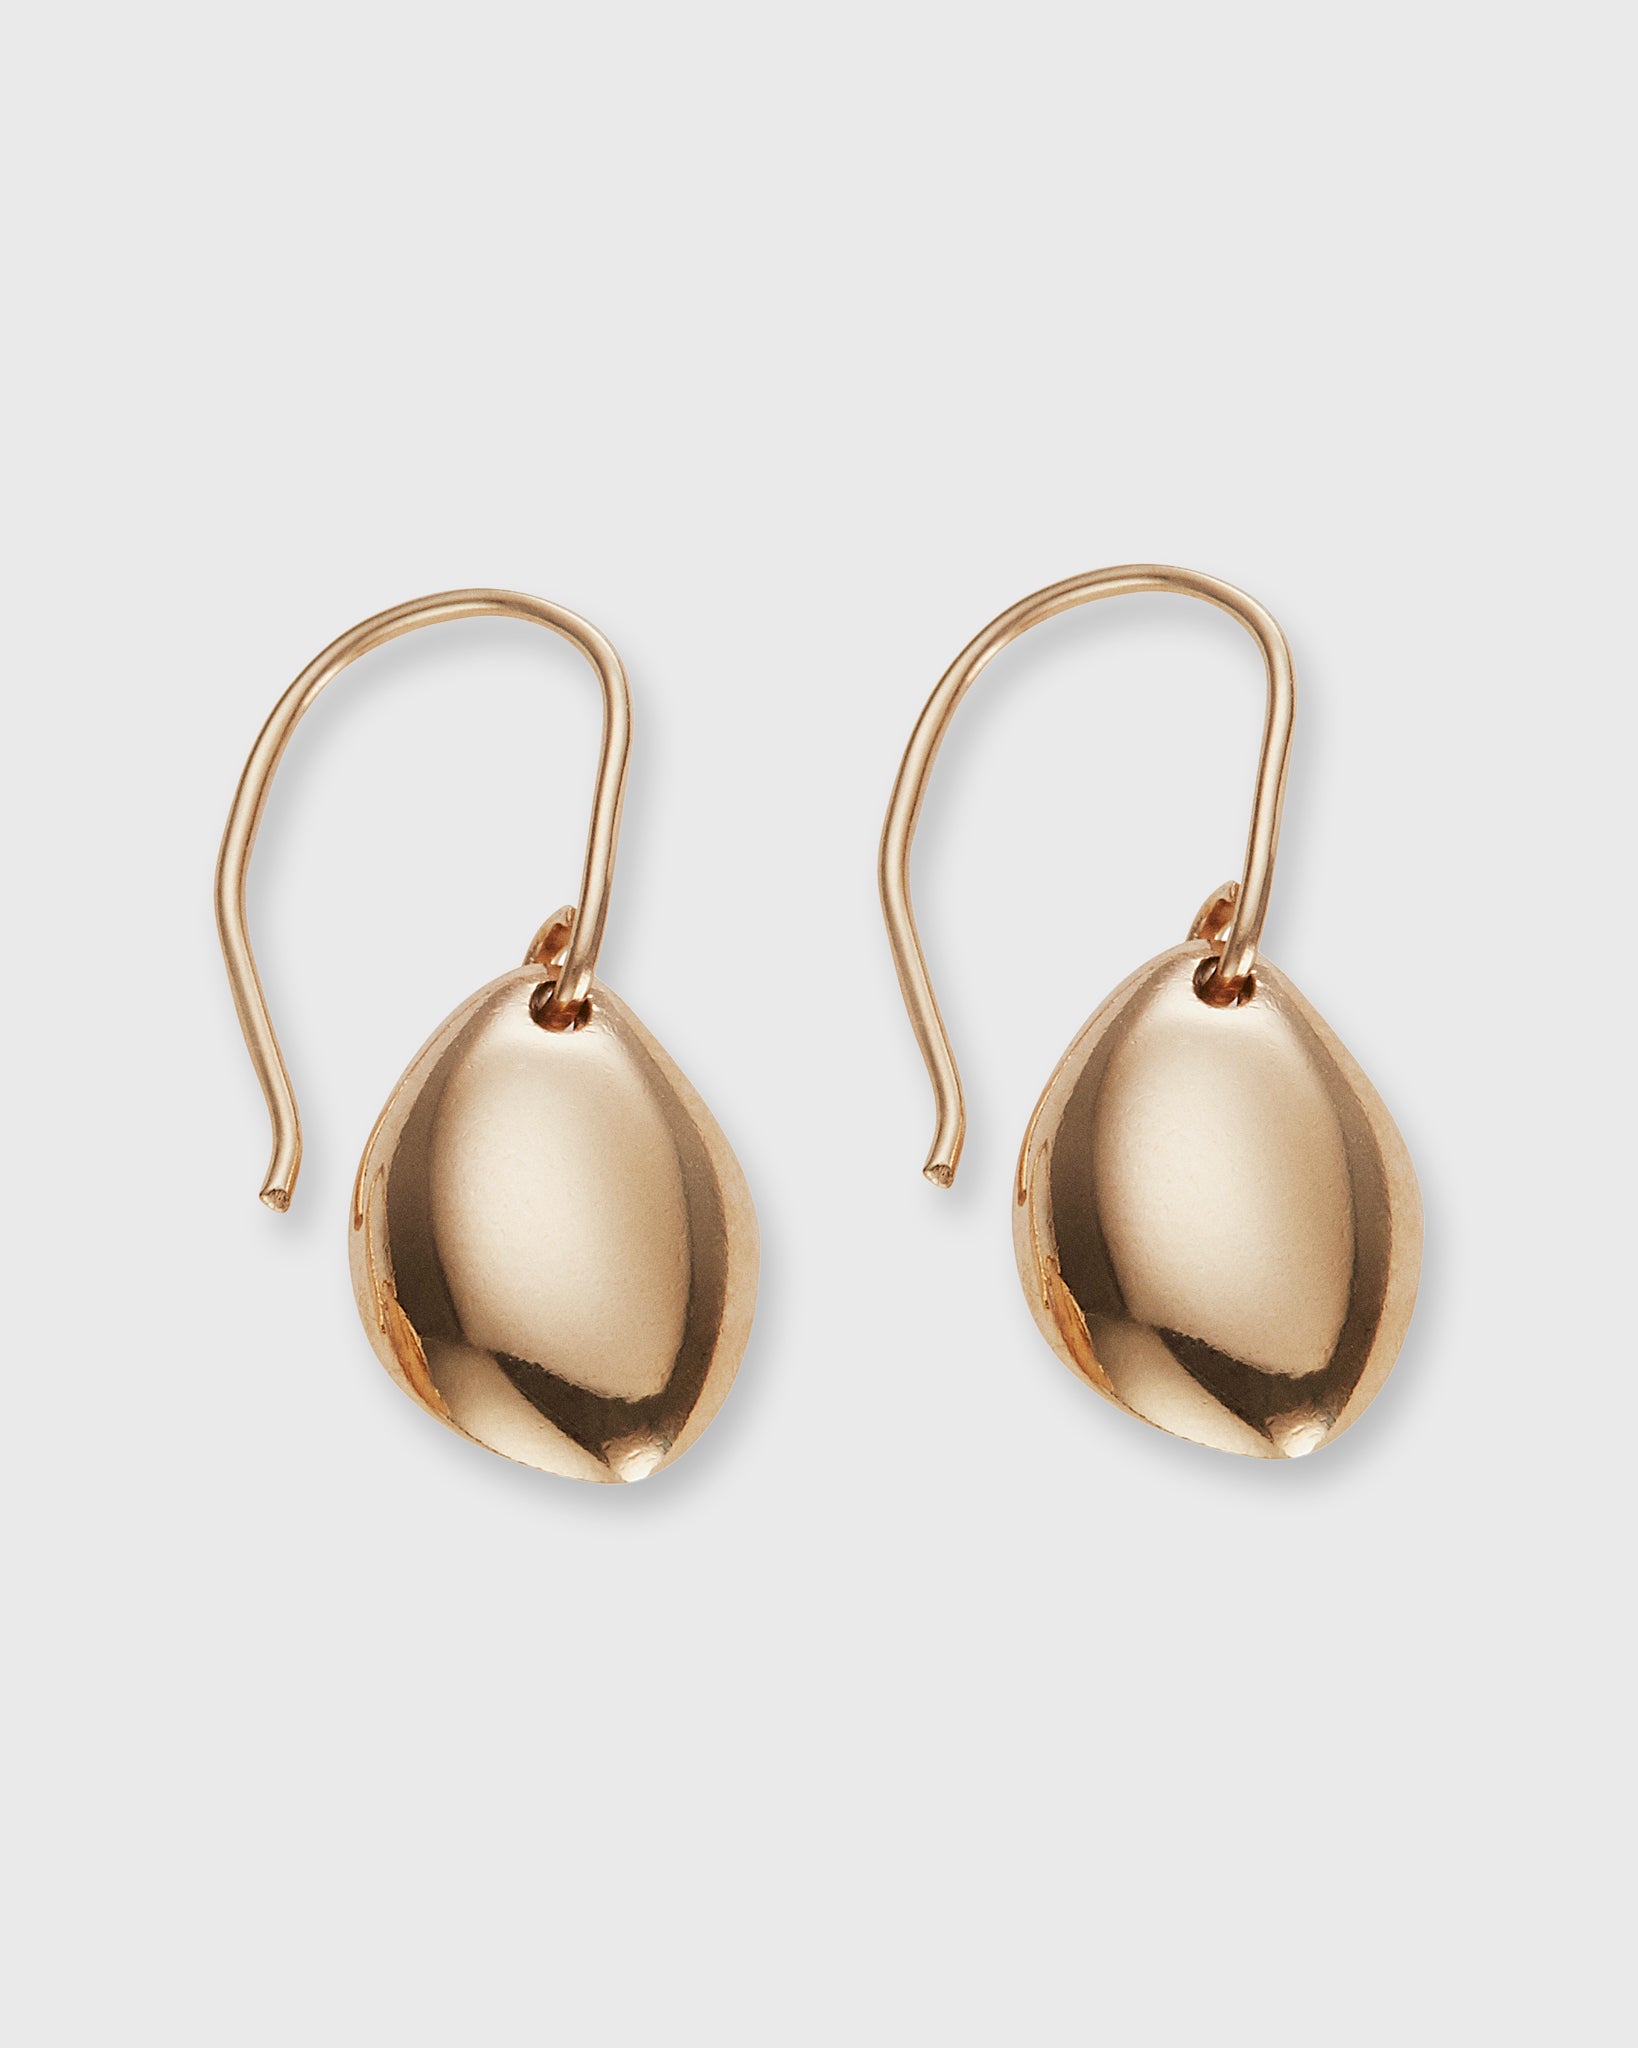 Short Oval Earrings in Gold-Plated Brass